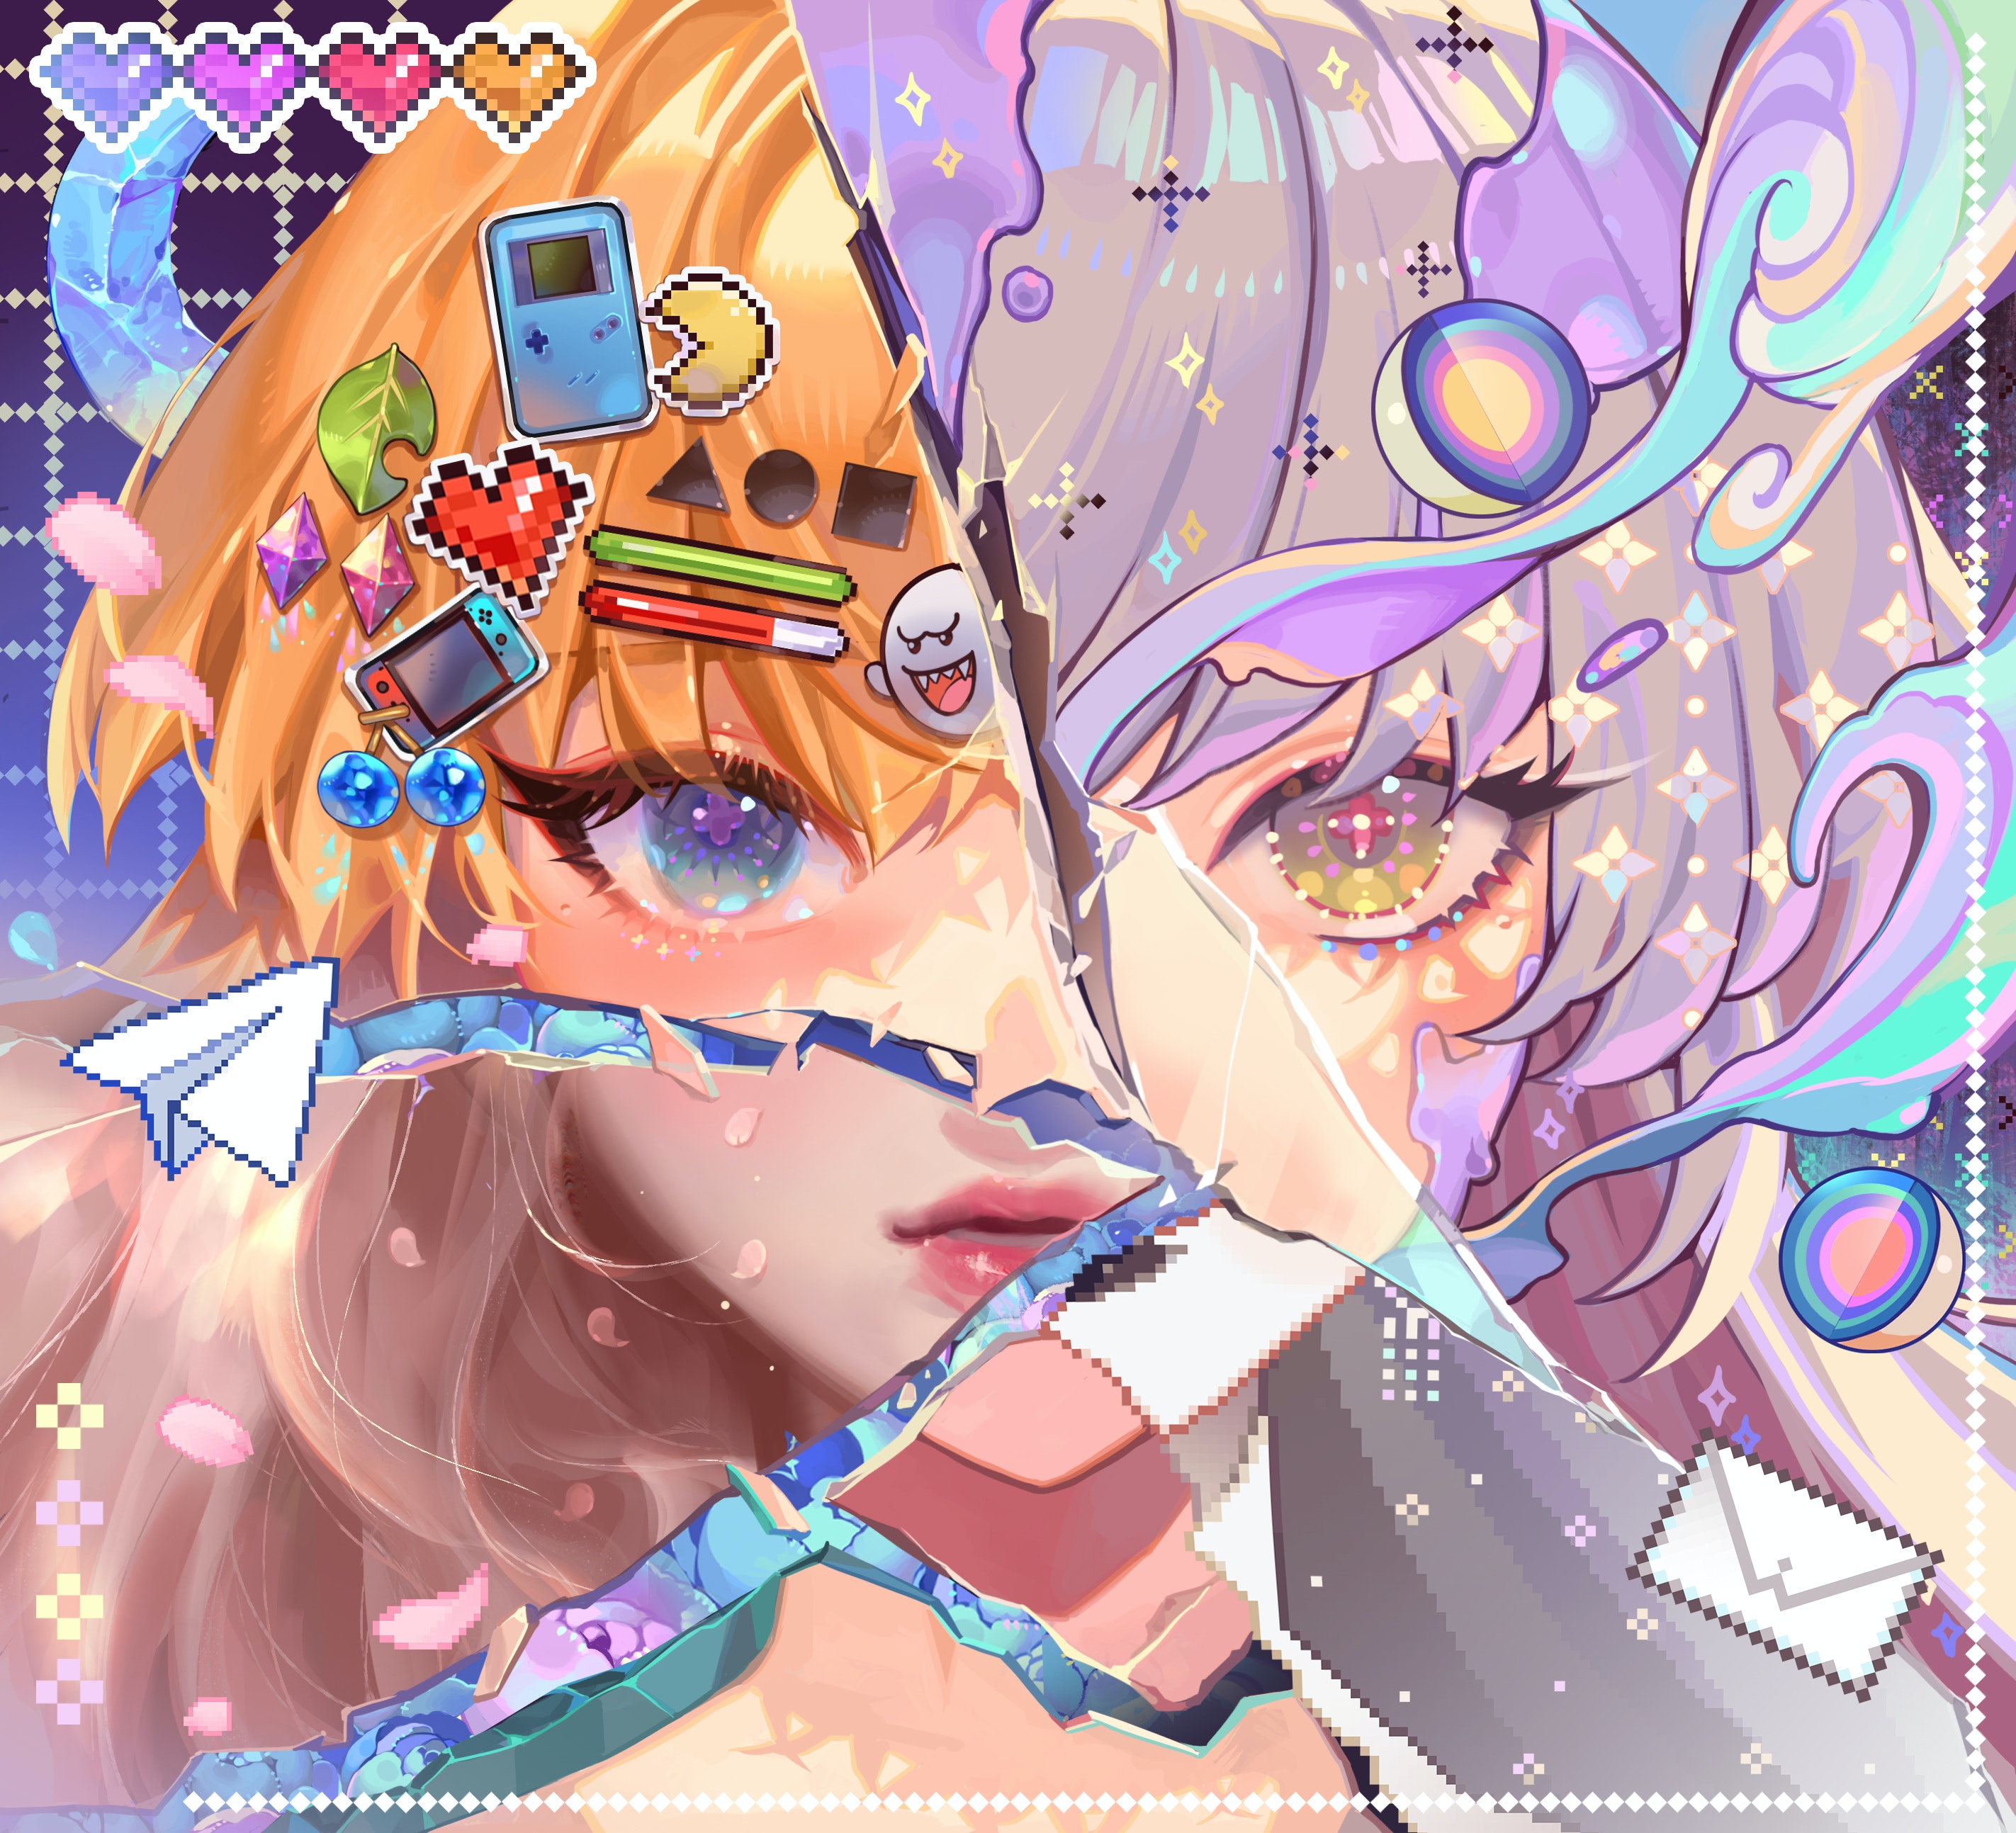 Orange Sekaii Digital Art Artwork Illustration Anime Anime Girls Women Blonde Short Hair Two Eye Col 2845x2587